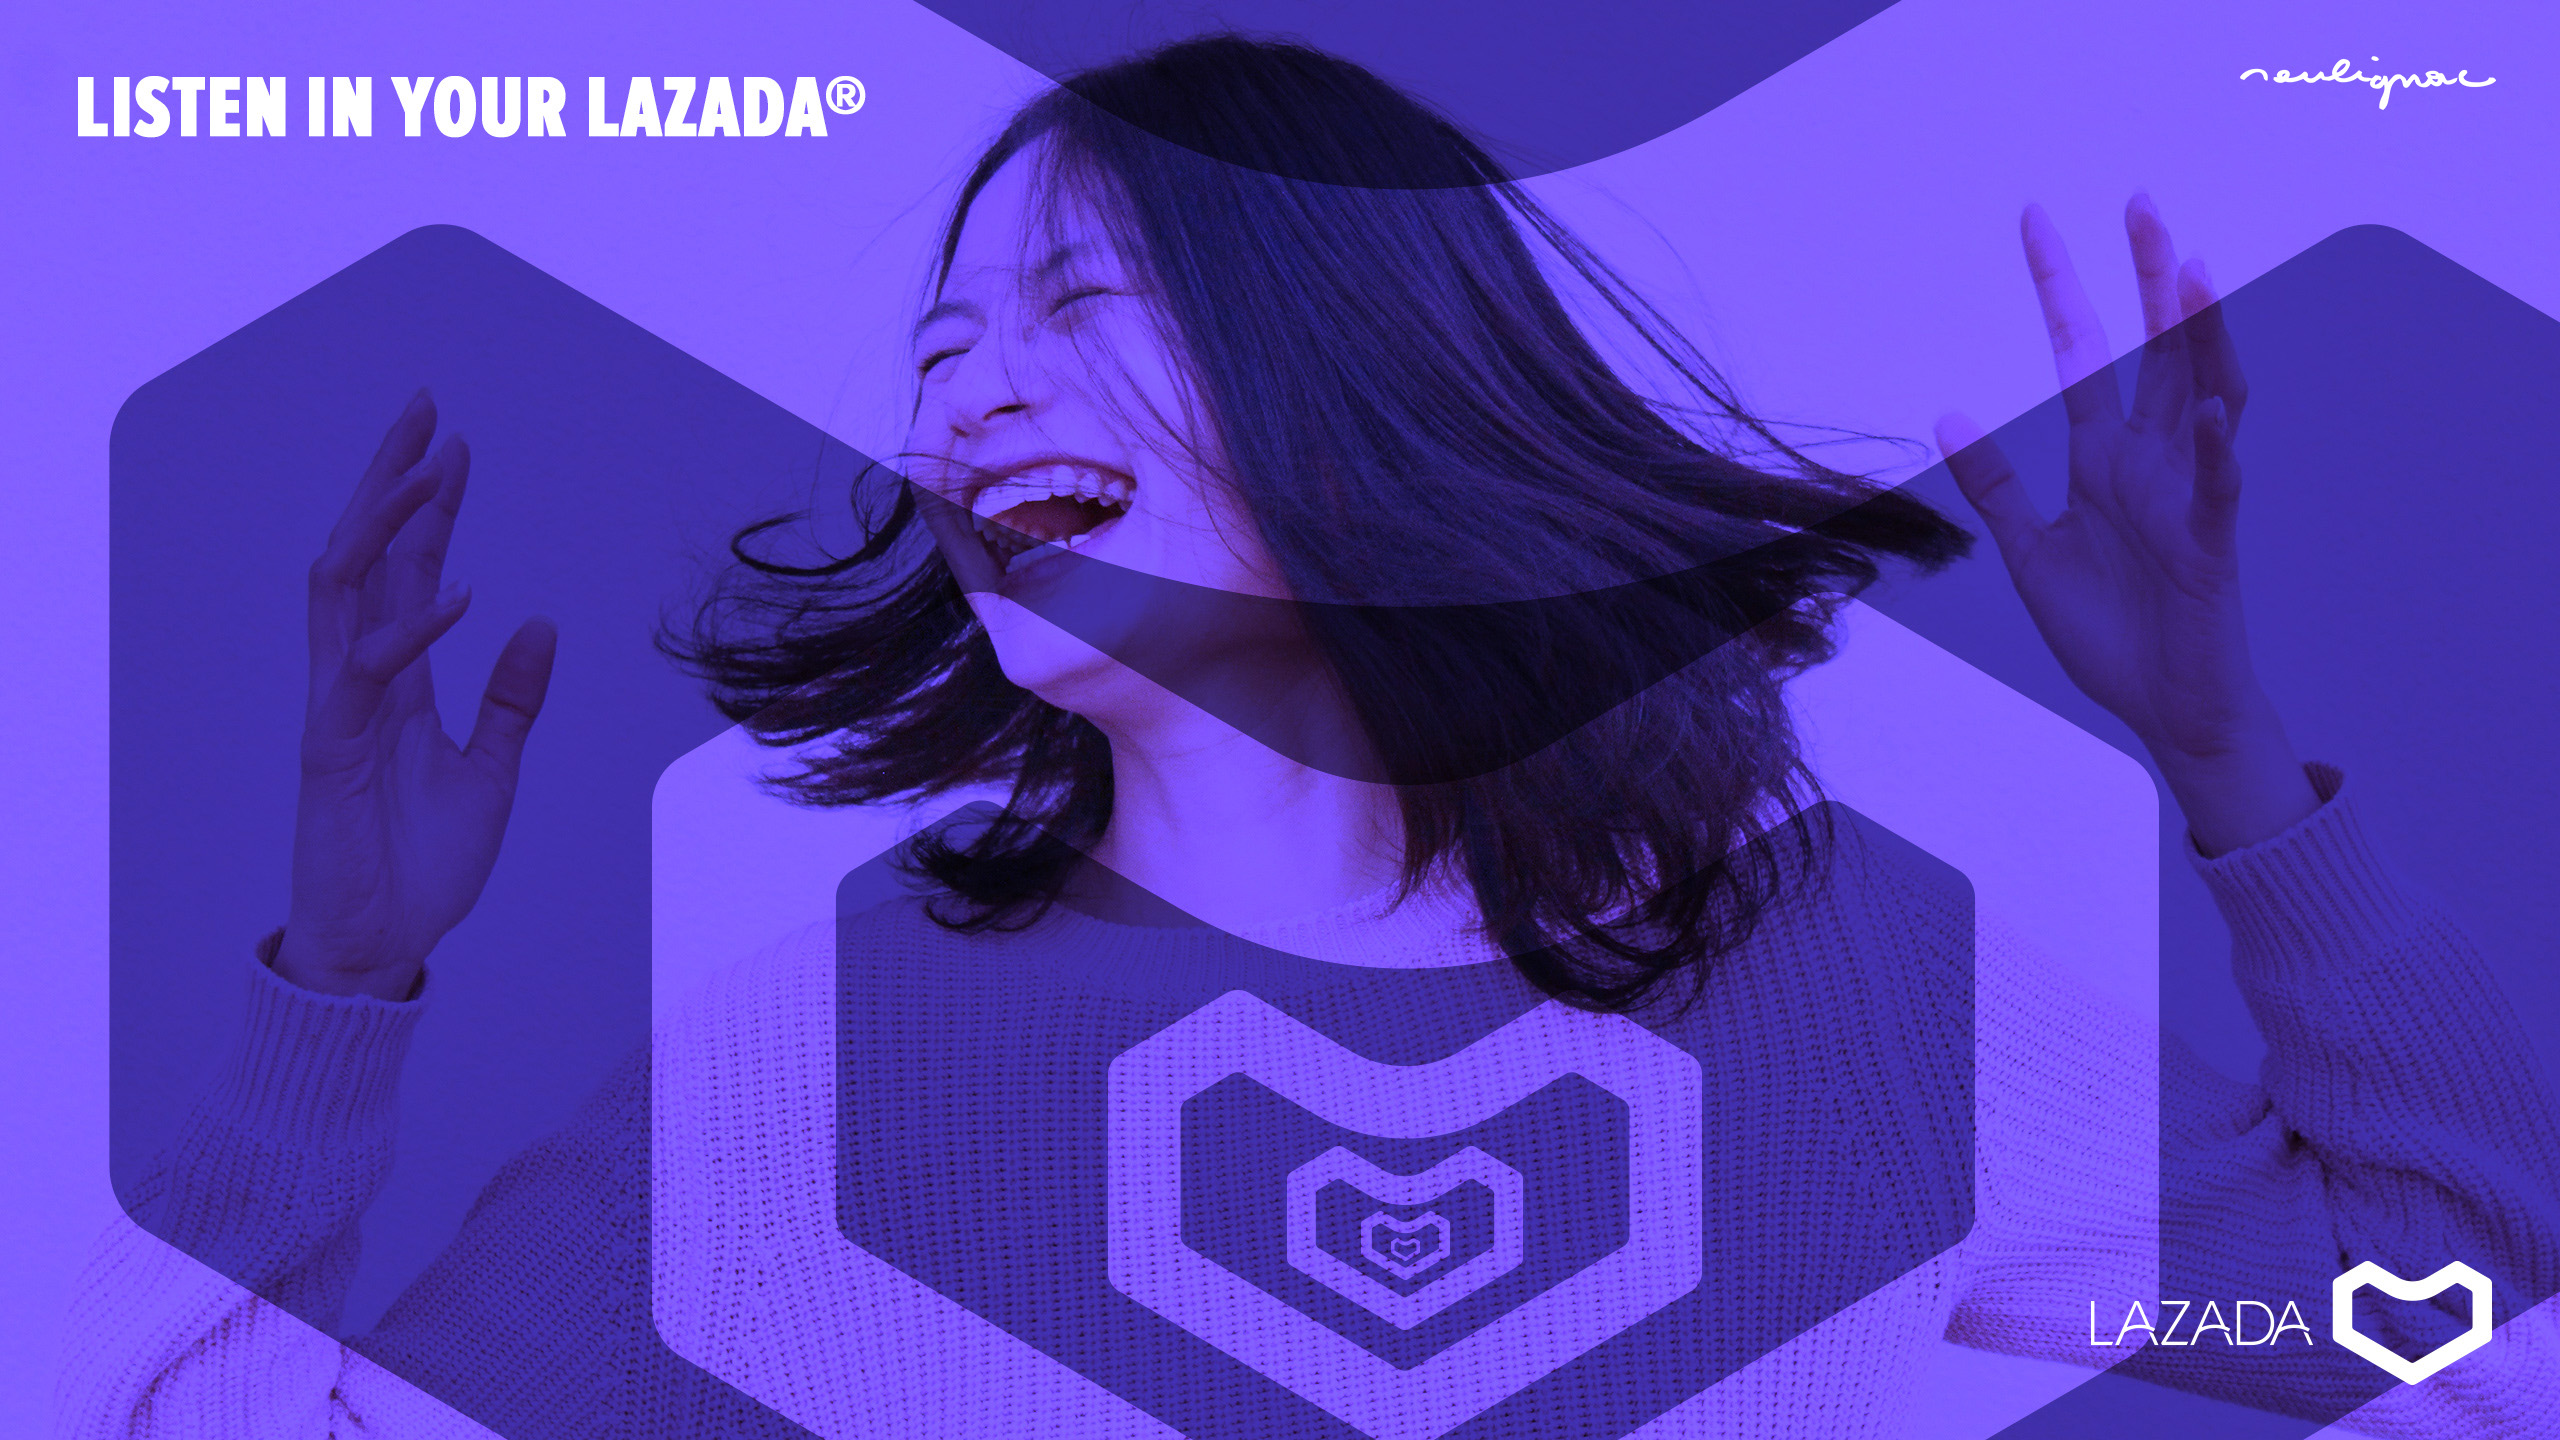 Lazada Group - Digital Campaign - LISTEN IN YOUR LAZADA  - Francois Soulignac - Digital Creative & Art Director - MADJOR Labbrand Shanghai